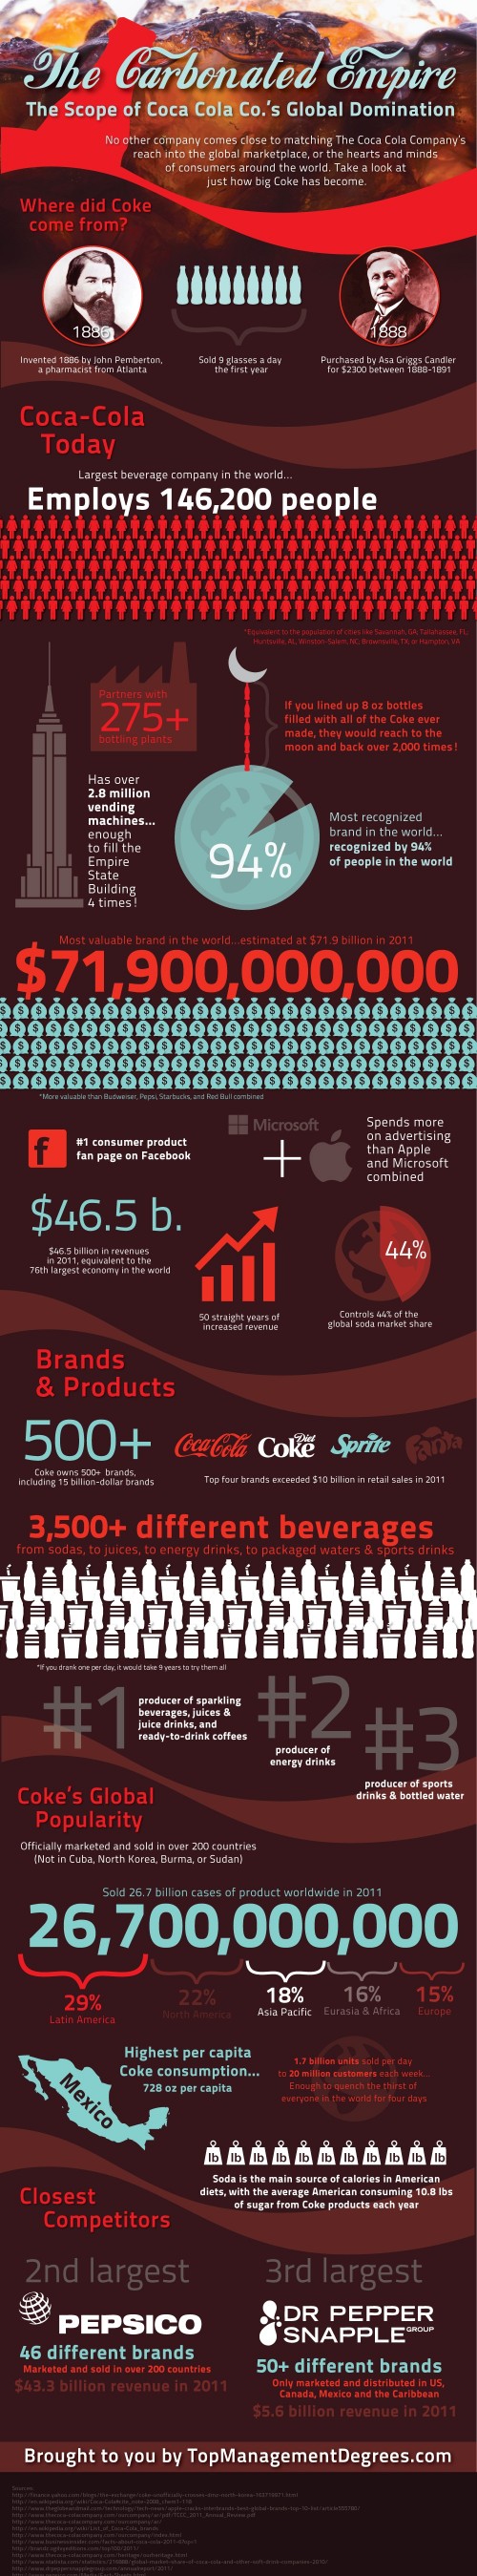 Why I Admire Coca-Cola For Its Brilliant Global Marketing? 